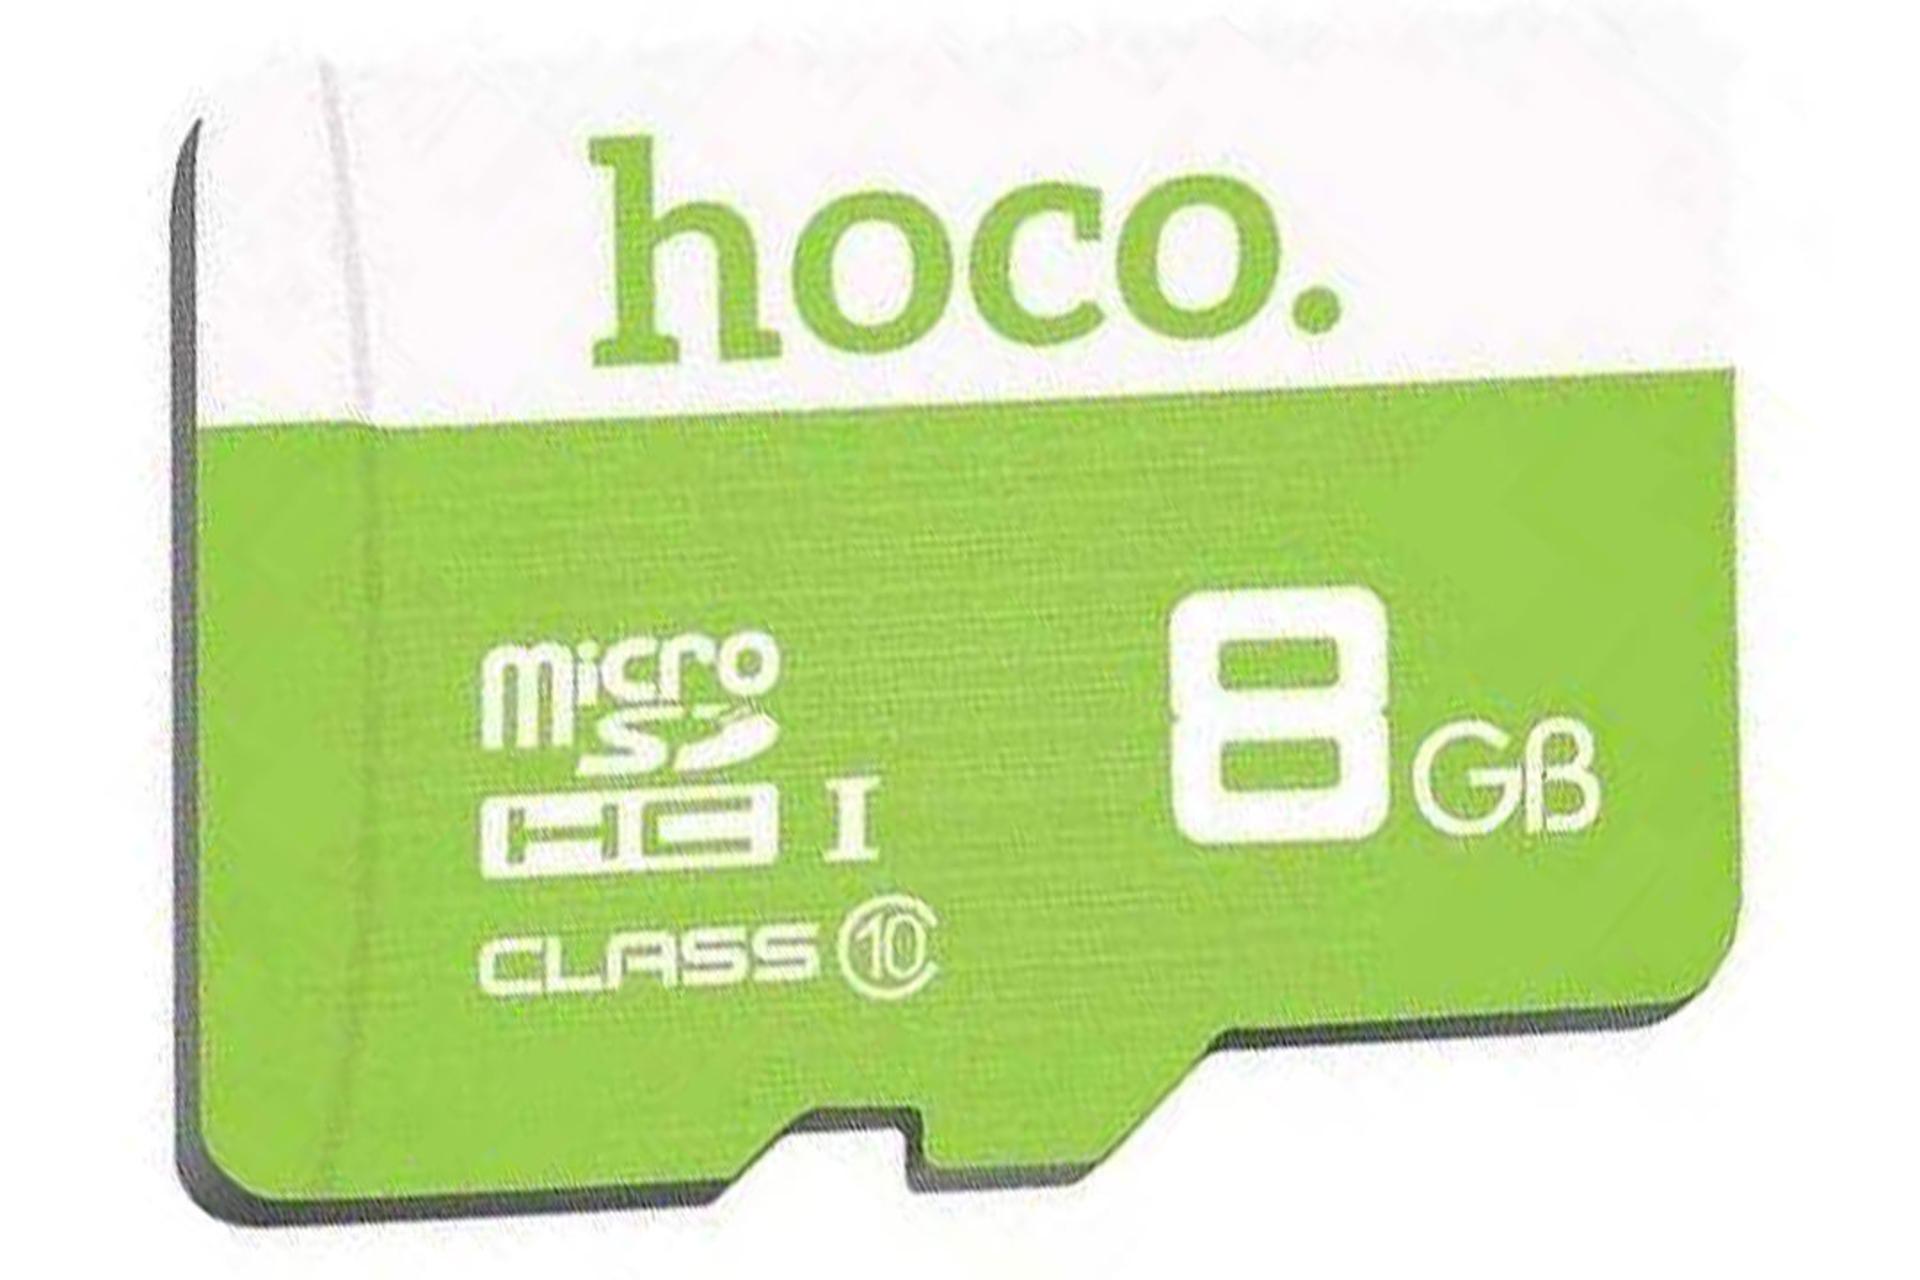 Hoco microSDHC Class 10 UHS-I U1 8GB